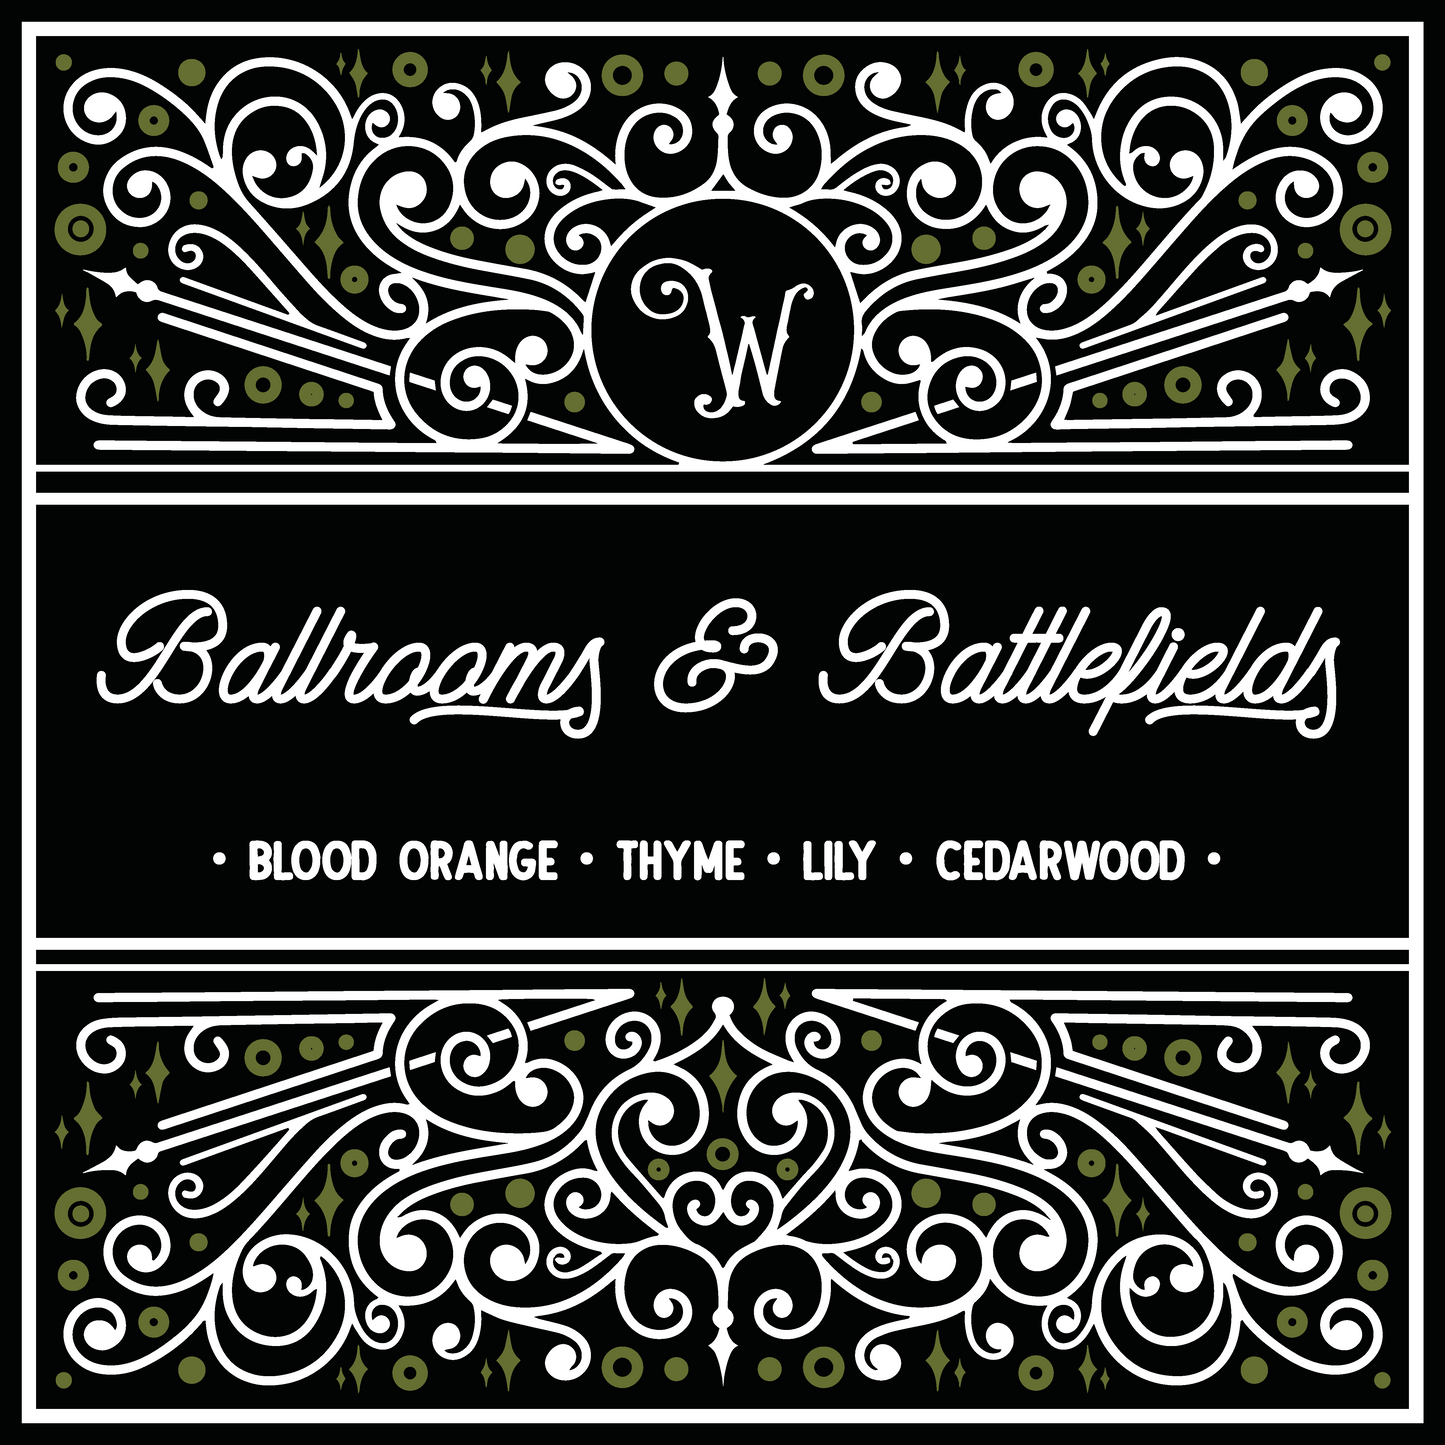 Ballrooms & Battlefields Candle - Blood Orange, Thyme & Cedarwood